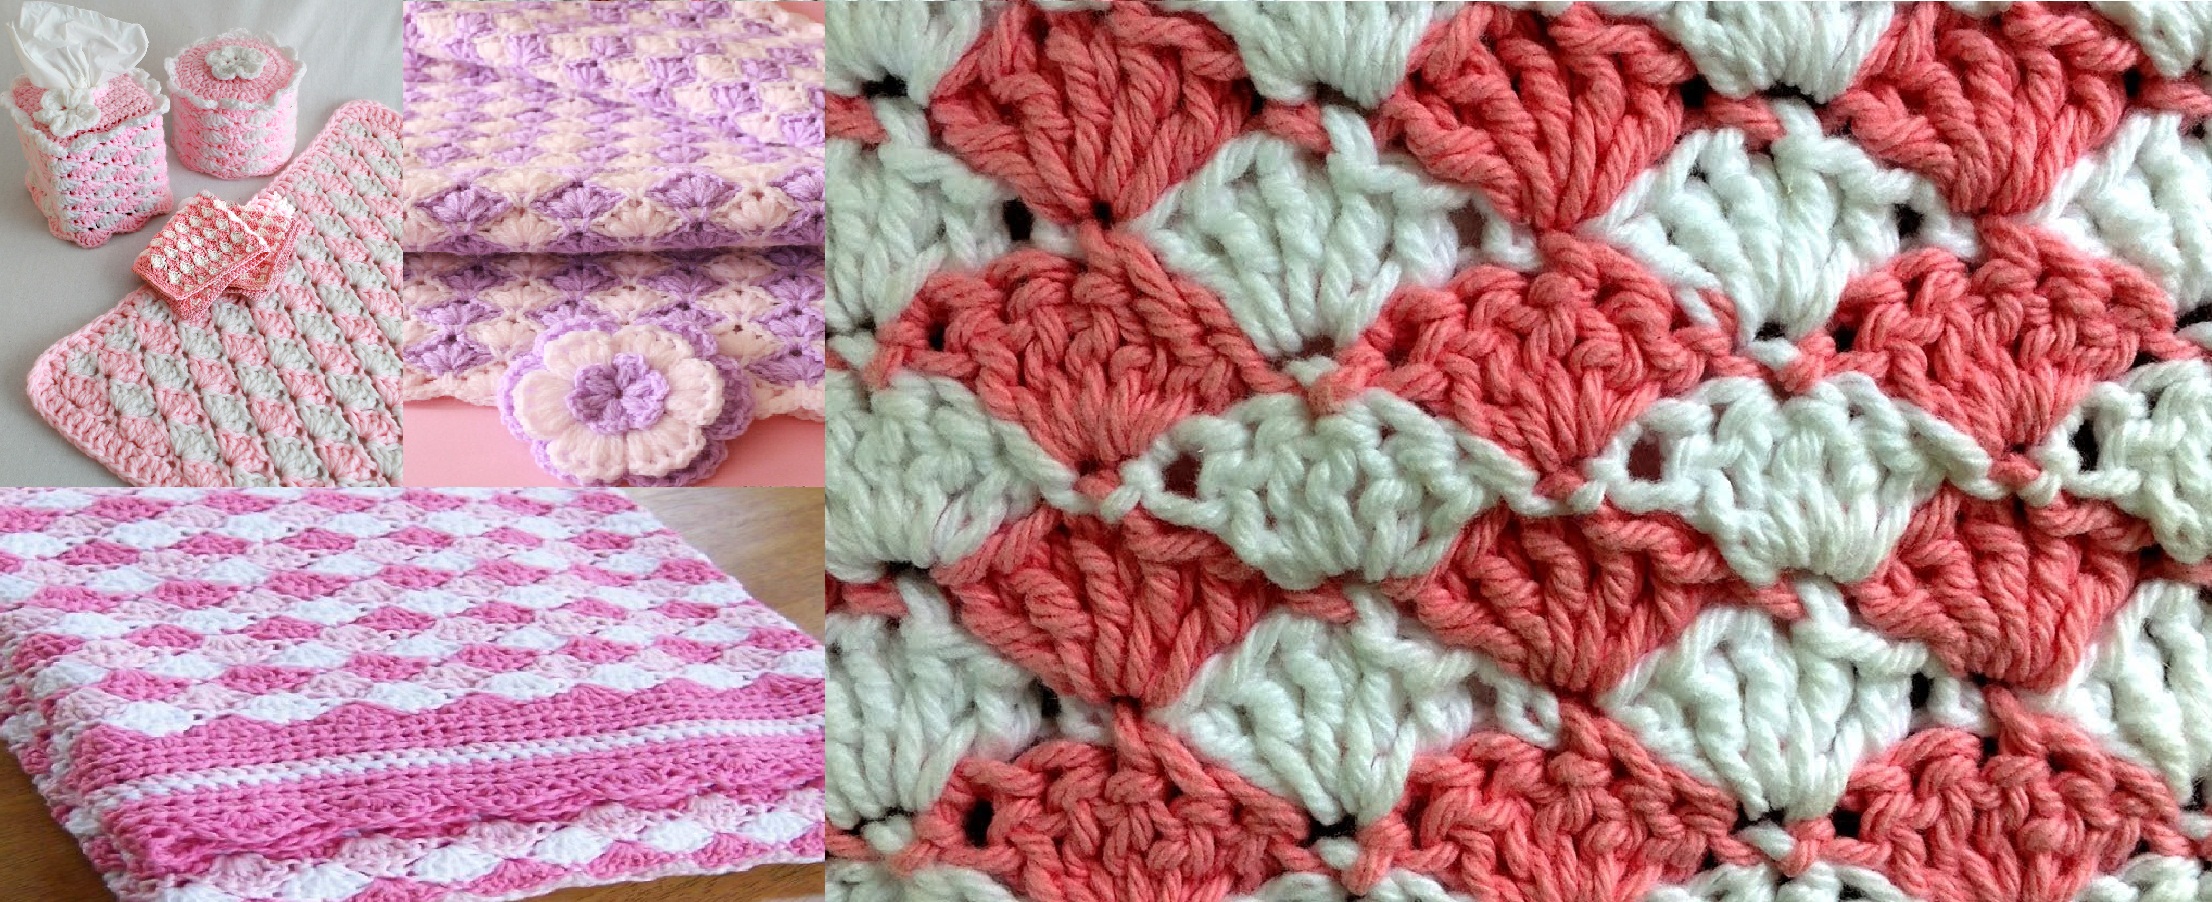 shell crochet